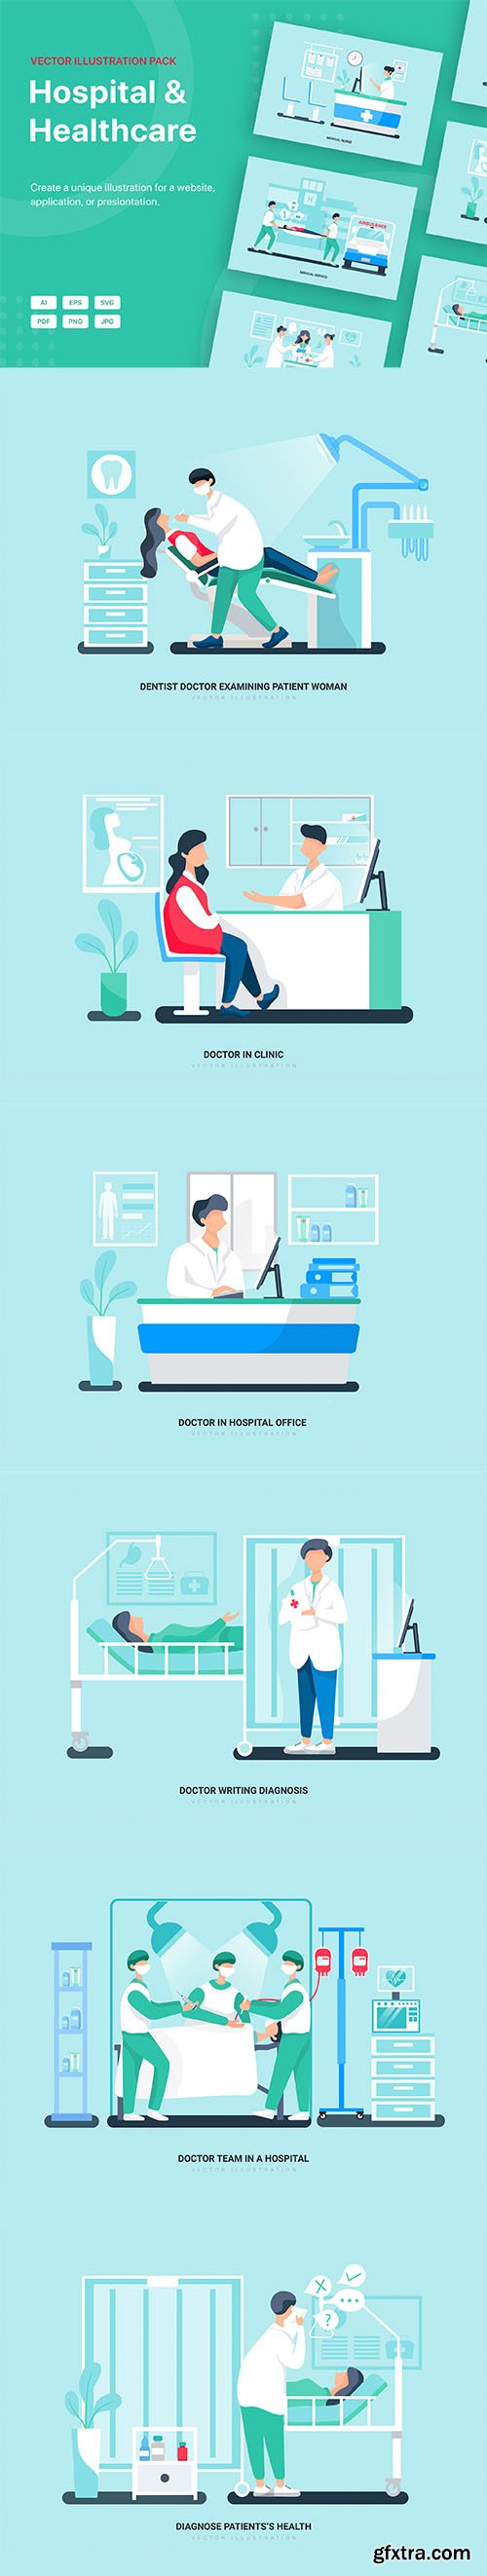 Leo - bHospital and Healthcare Vector Scenes